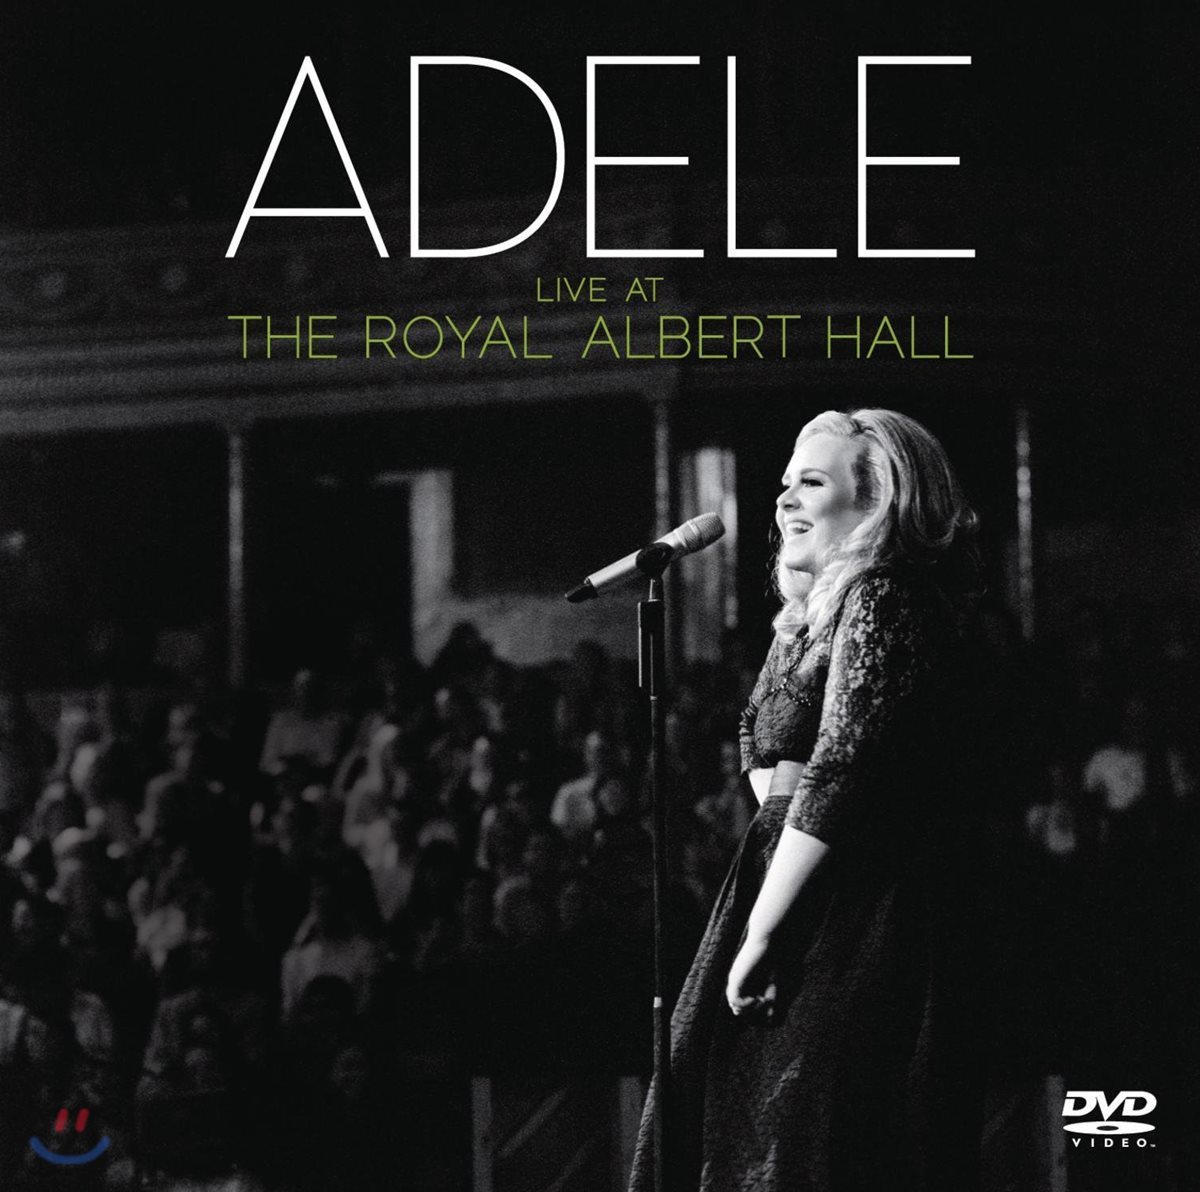 Adele - Live At The Royal Albert Hall 아델 - 2011년 런던 로열 앨버트 홀 라이브 앨범 [CD+DVD]